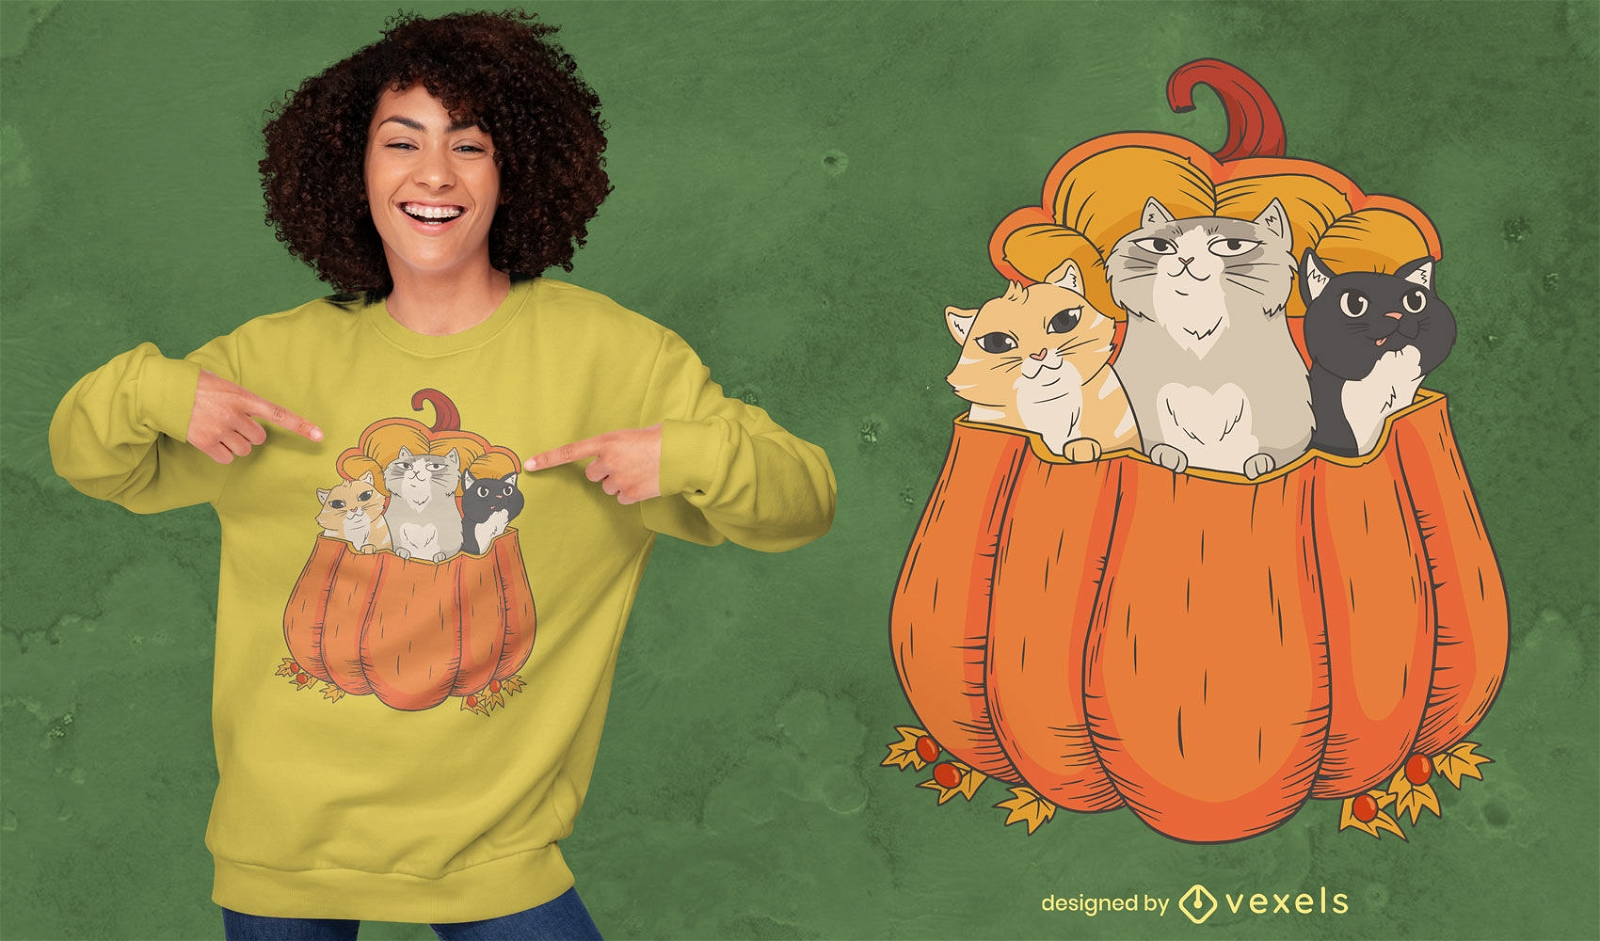 Katzen im K?rbisillustrations-T-Shirt-Design